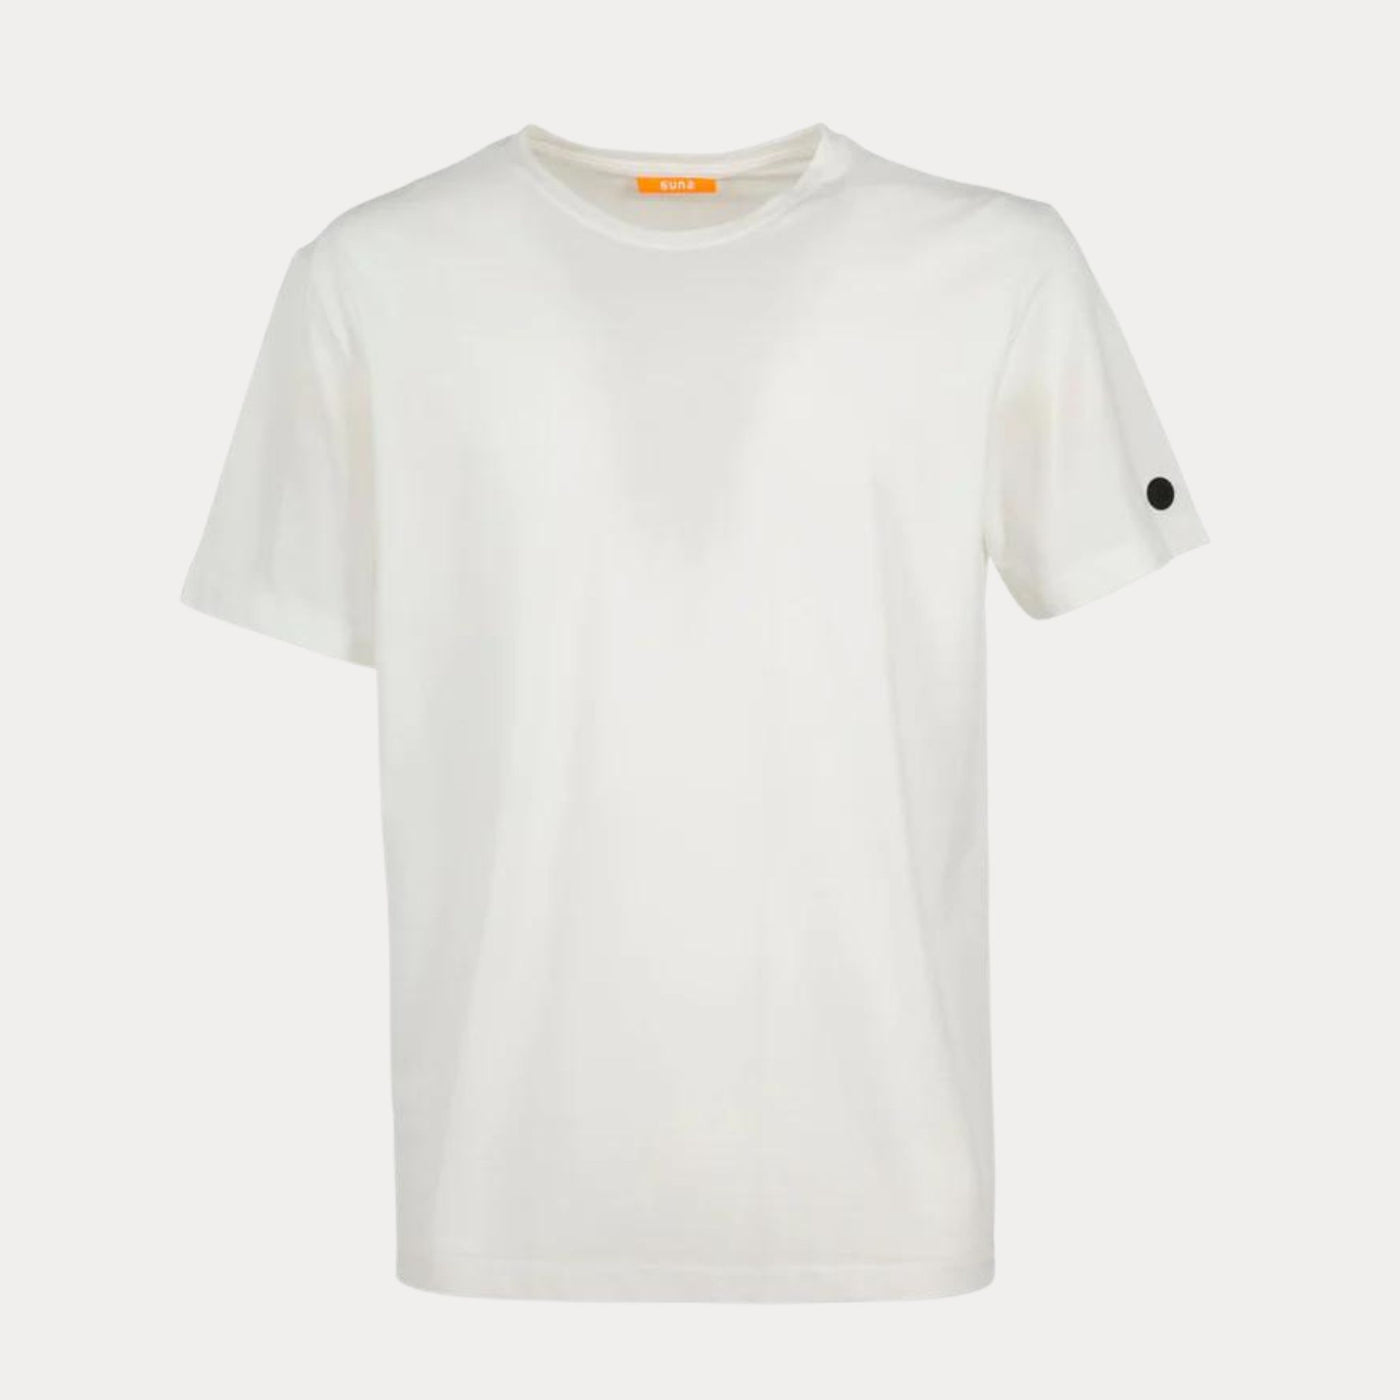 T-shirt da uomo bianca firmata Sunstripes vista frontale